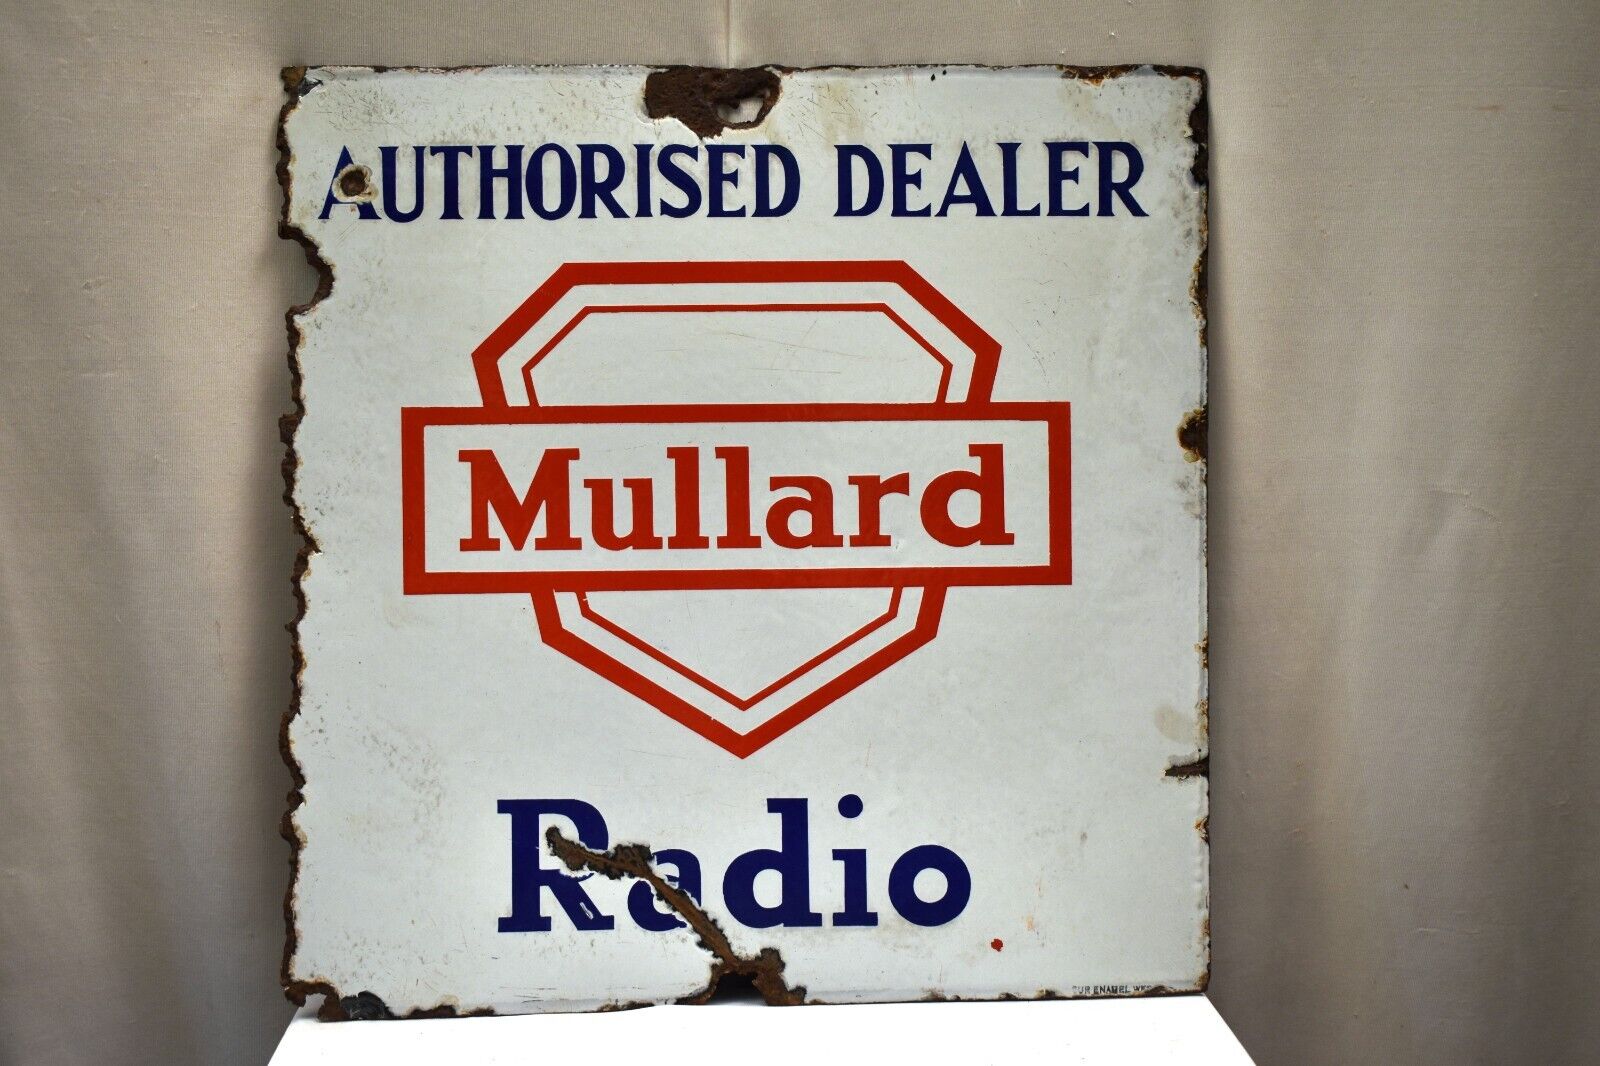 Vintage Mullard Radio Porcelain Enamel Sign Board Advertising Authorized Dealer